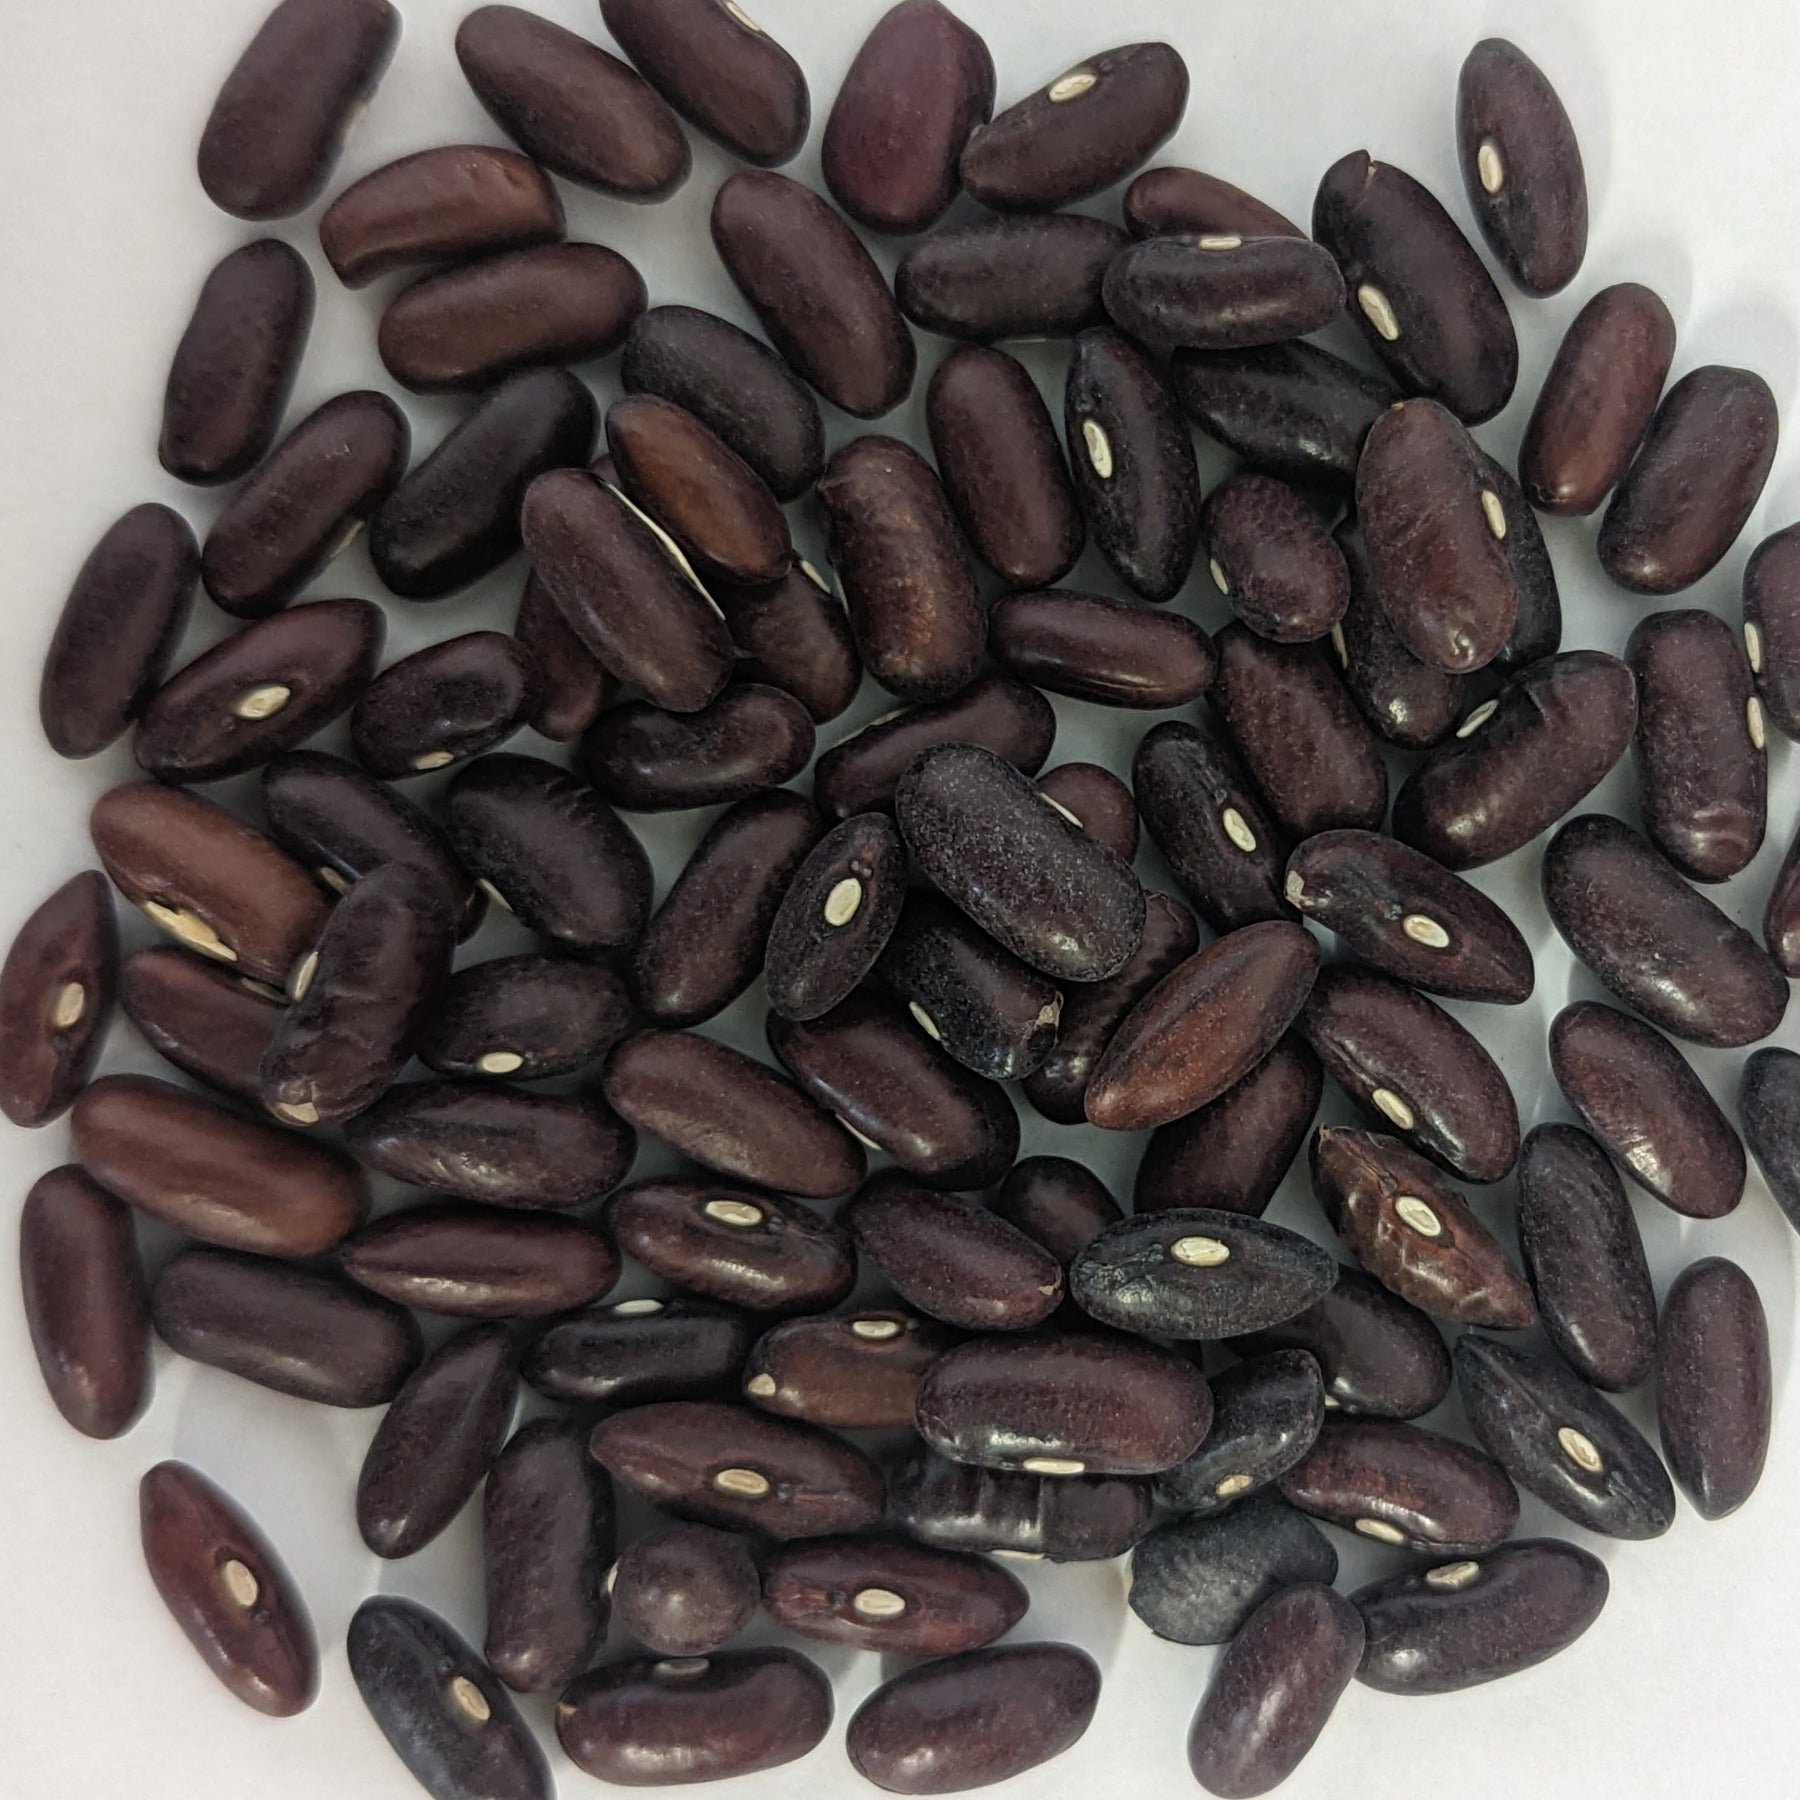 Provider Bush Green Bean Seeds